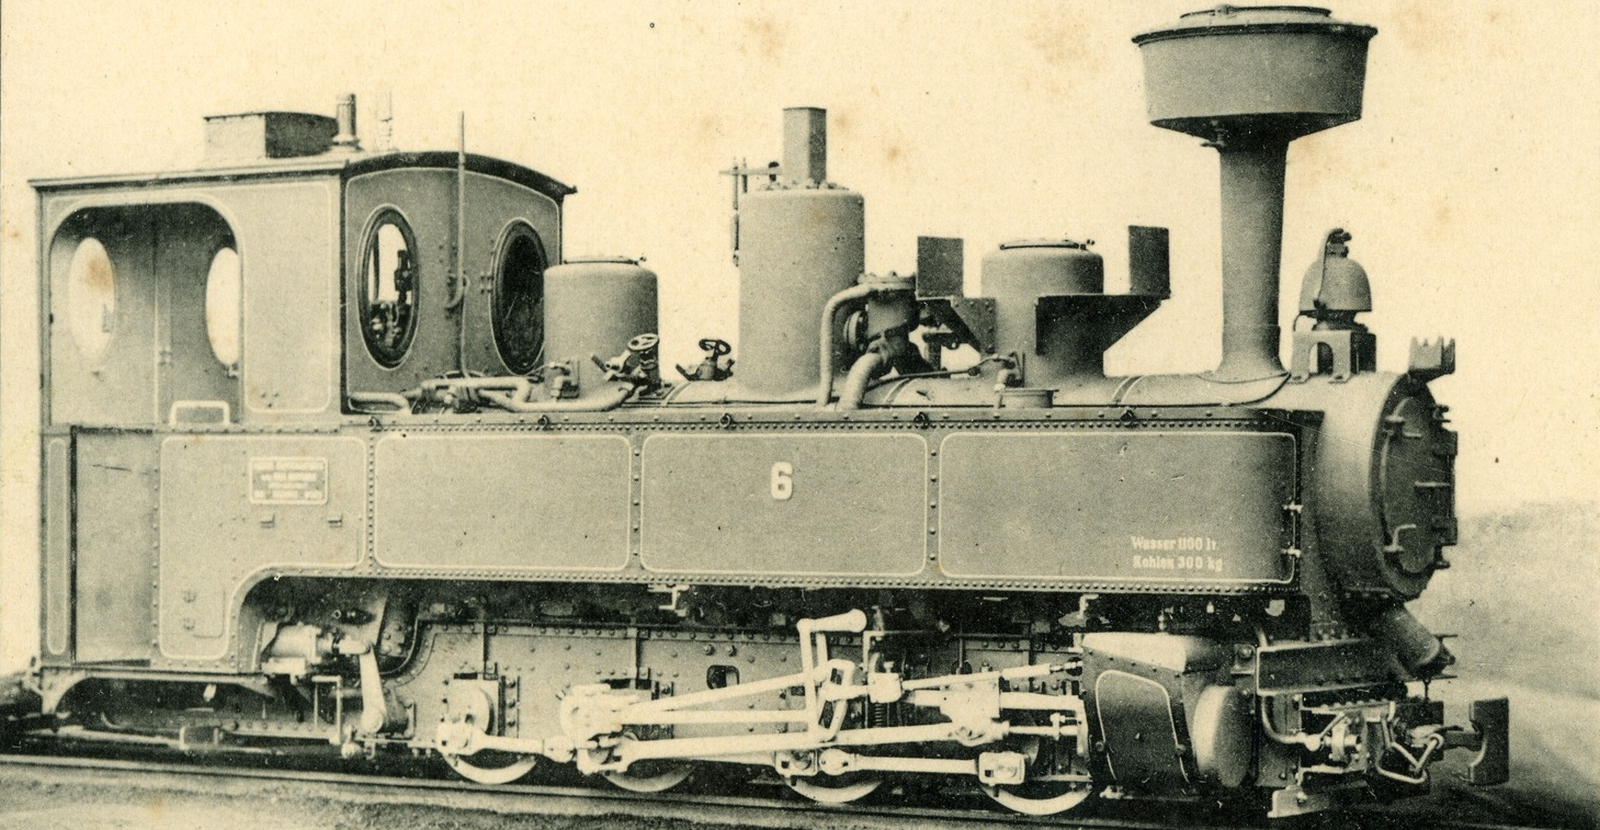 Brigadelokomotive built by Hartmann in Chemnitz on a postcard